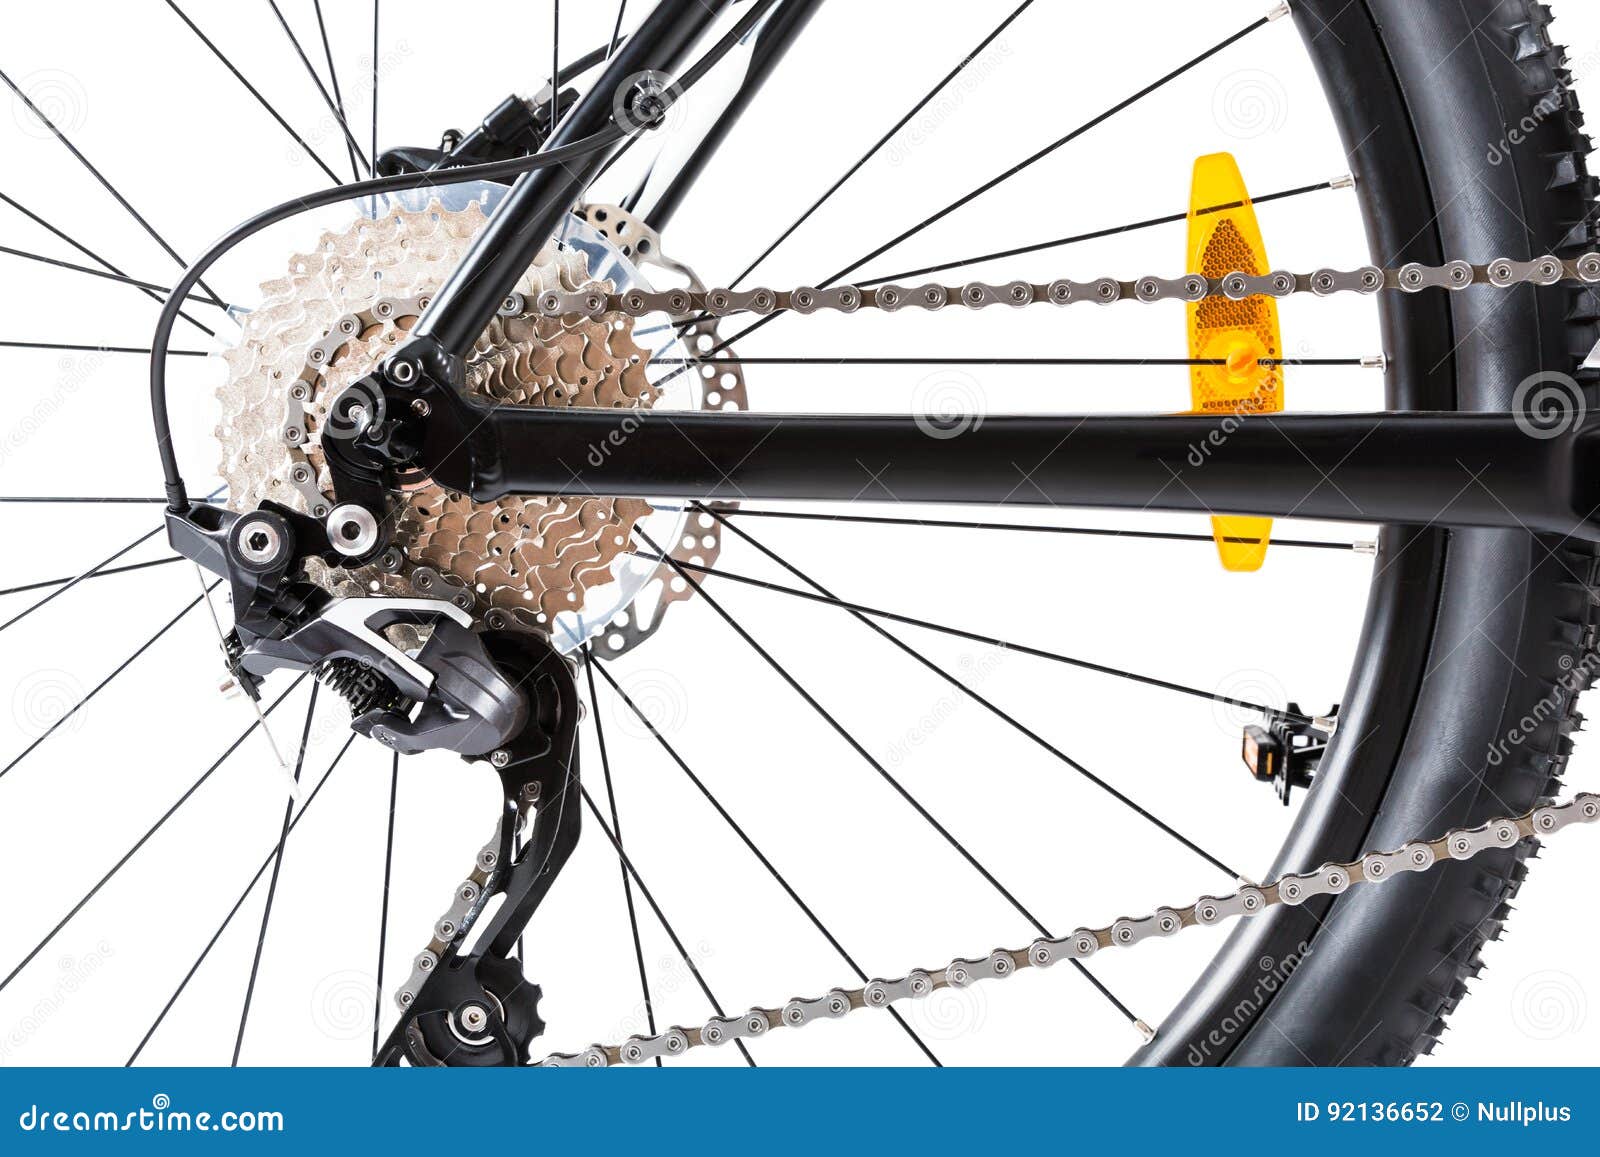 На заднем колесе на велосипеде видео. Велосипед Nordway заднее колесо. Велосипед крупным планом. Заднее колесо горного велосипеда. Горный велик заднее колесо.